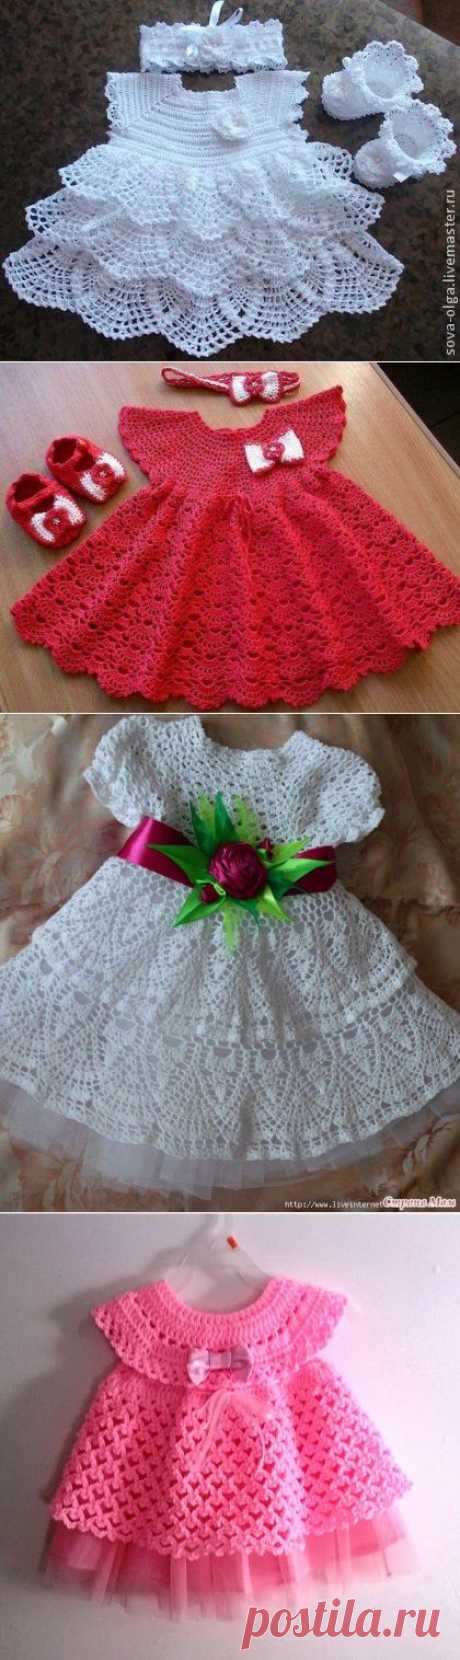 Mary Helen artesanatos croche e trico: Vestidos bebe